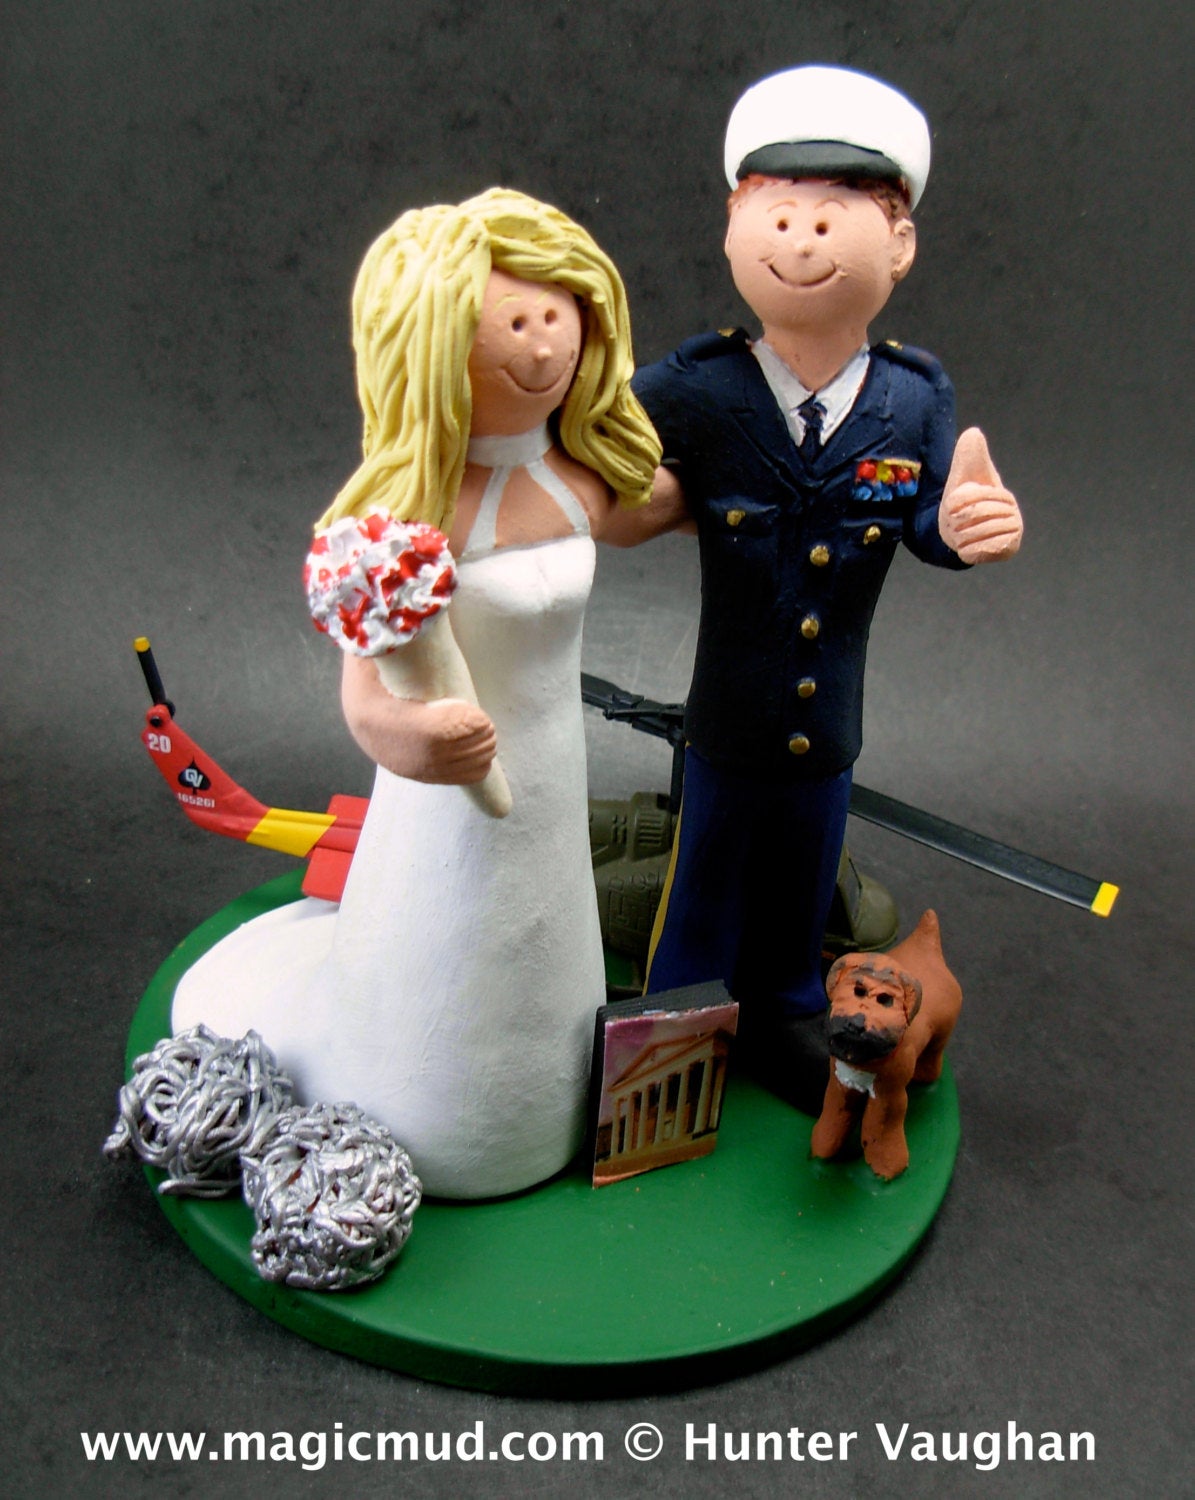 Sailor Groom Wedding Cake Topper, Sailor Wedding Anniversary Gift/Cake Topper, Military Wedding Cake Topper, Wedding Anniversary Cake Topper - iWeddingCakeToppers